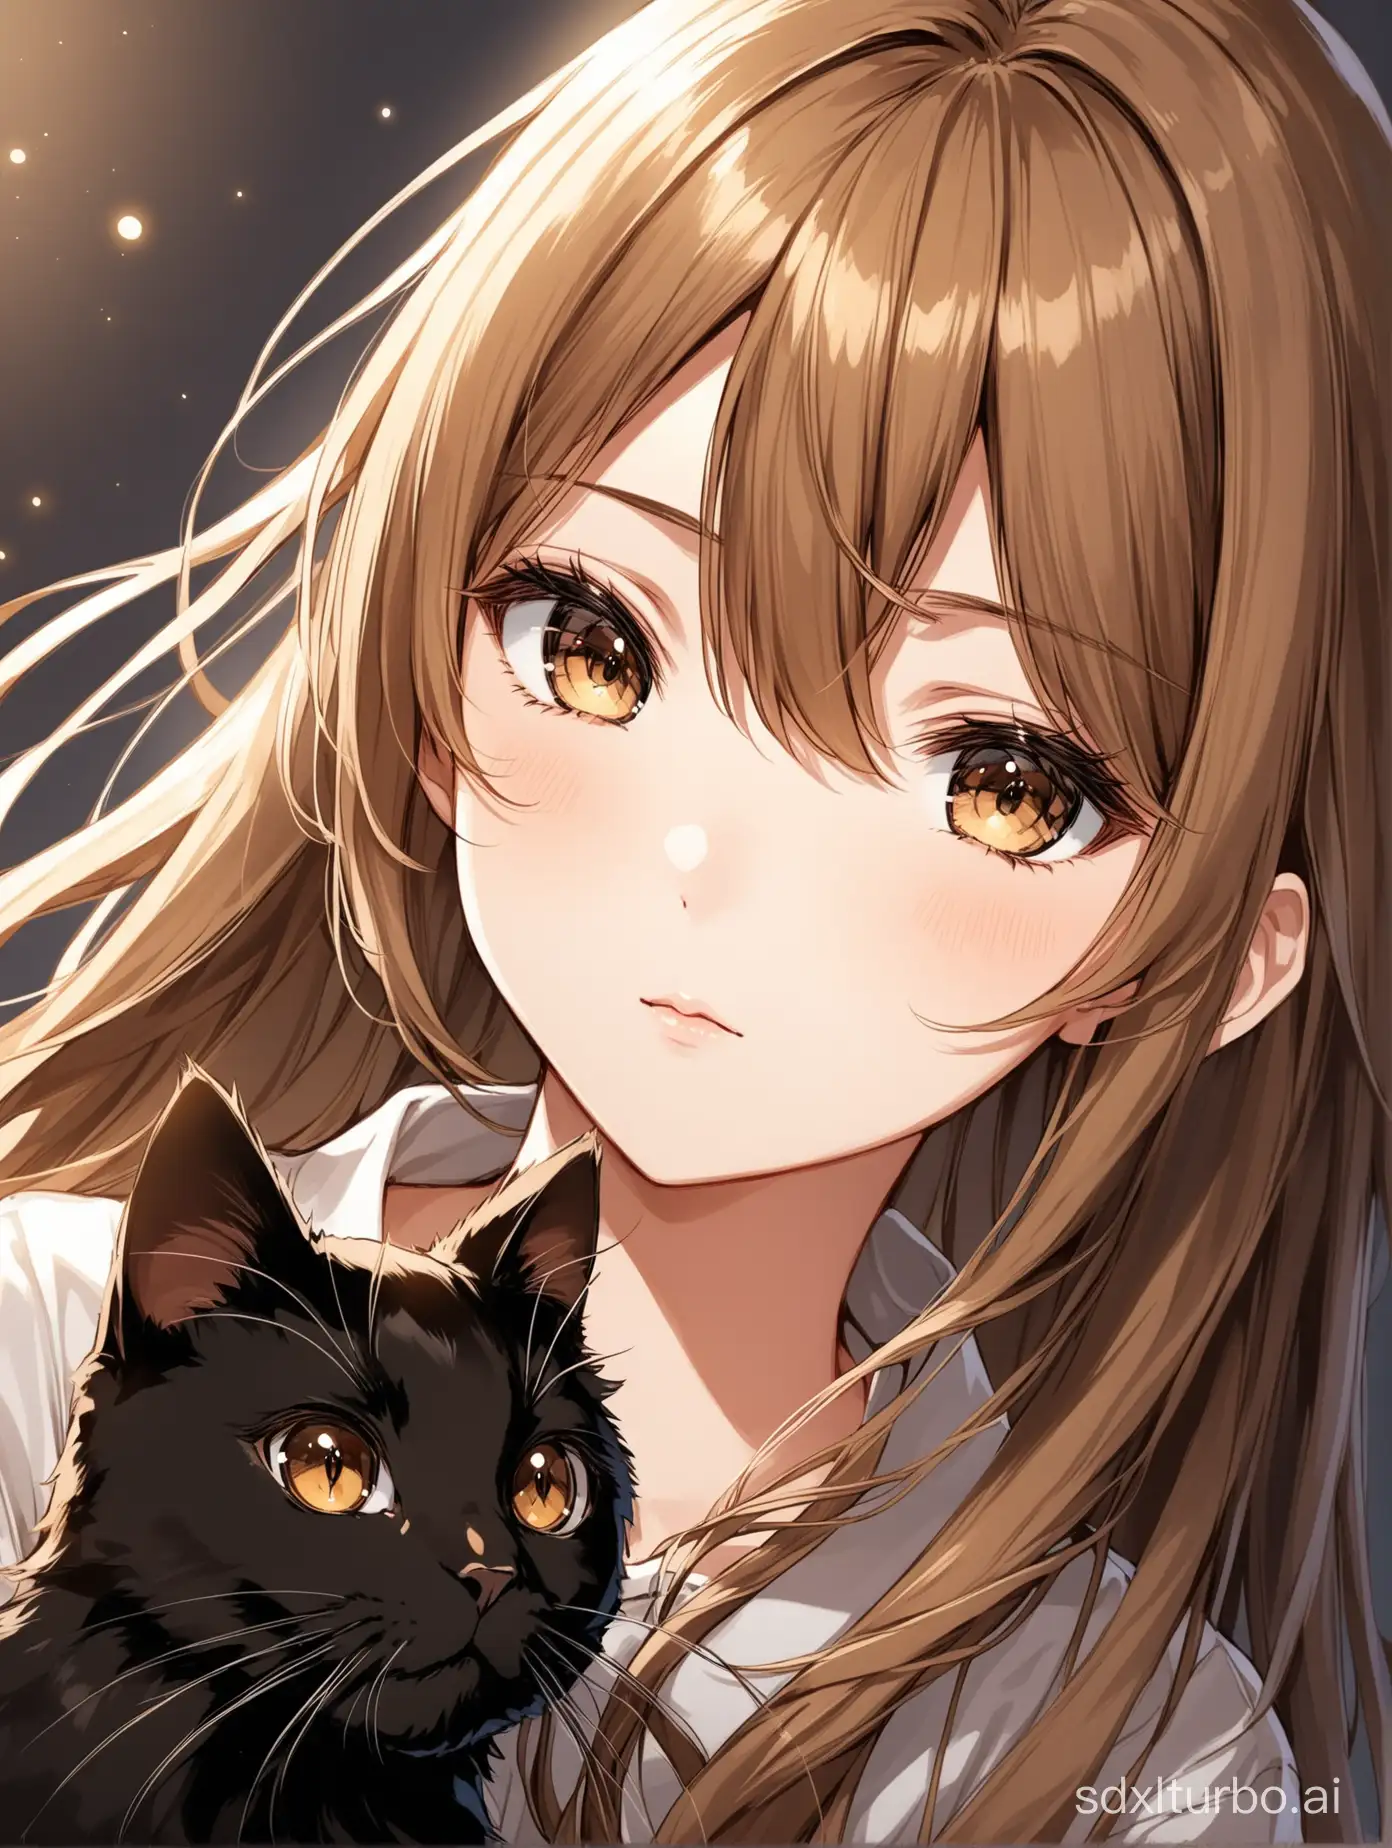 Anime-Girl-with-Dark-Blond-Hair-and-Black-Cat-Companion